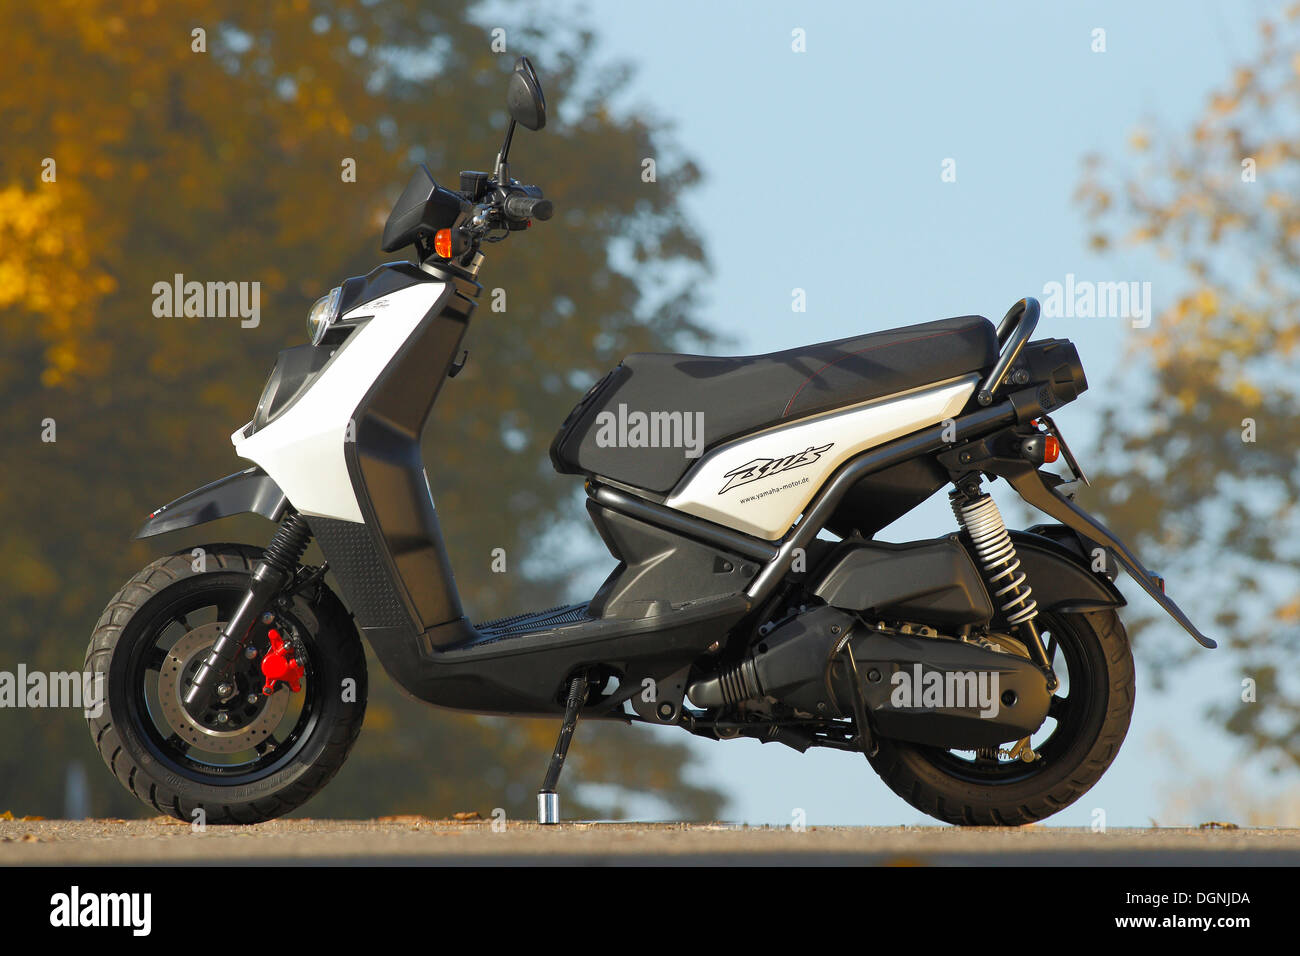 Yamaha BWs 125 motor scooter Stock Photo - Alamy